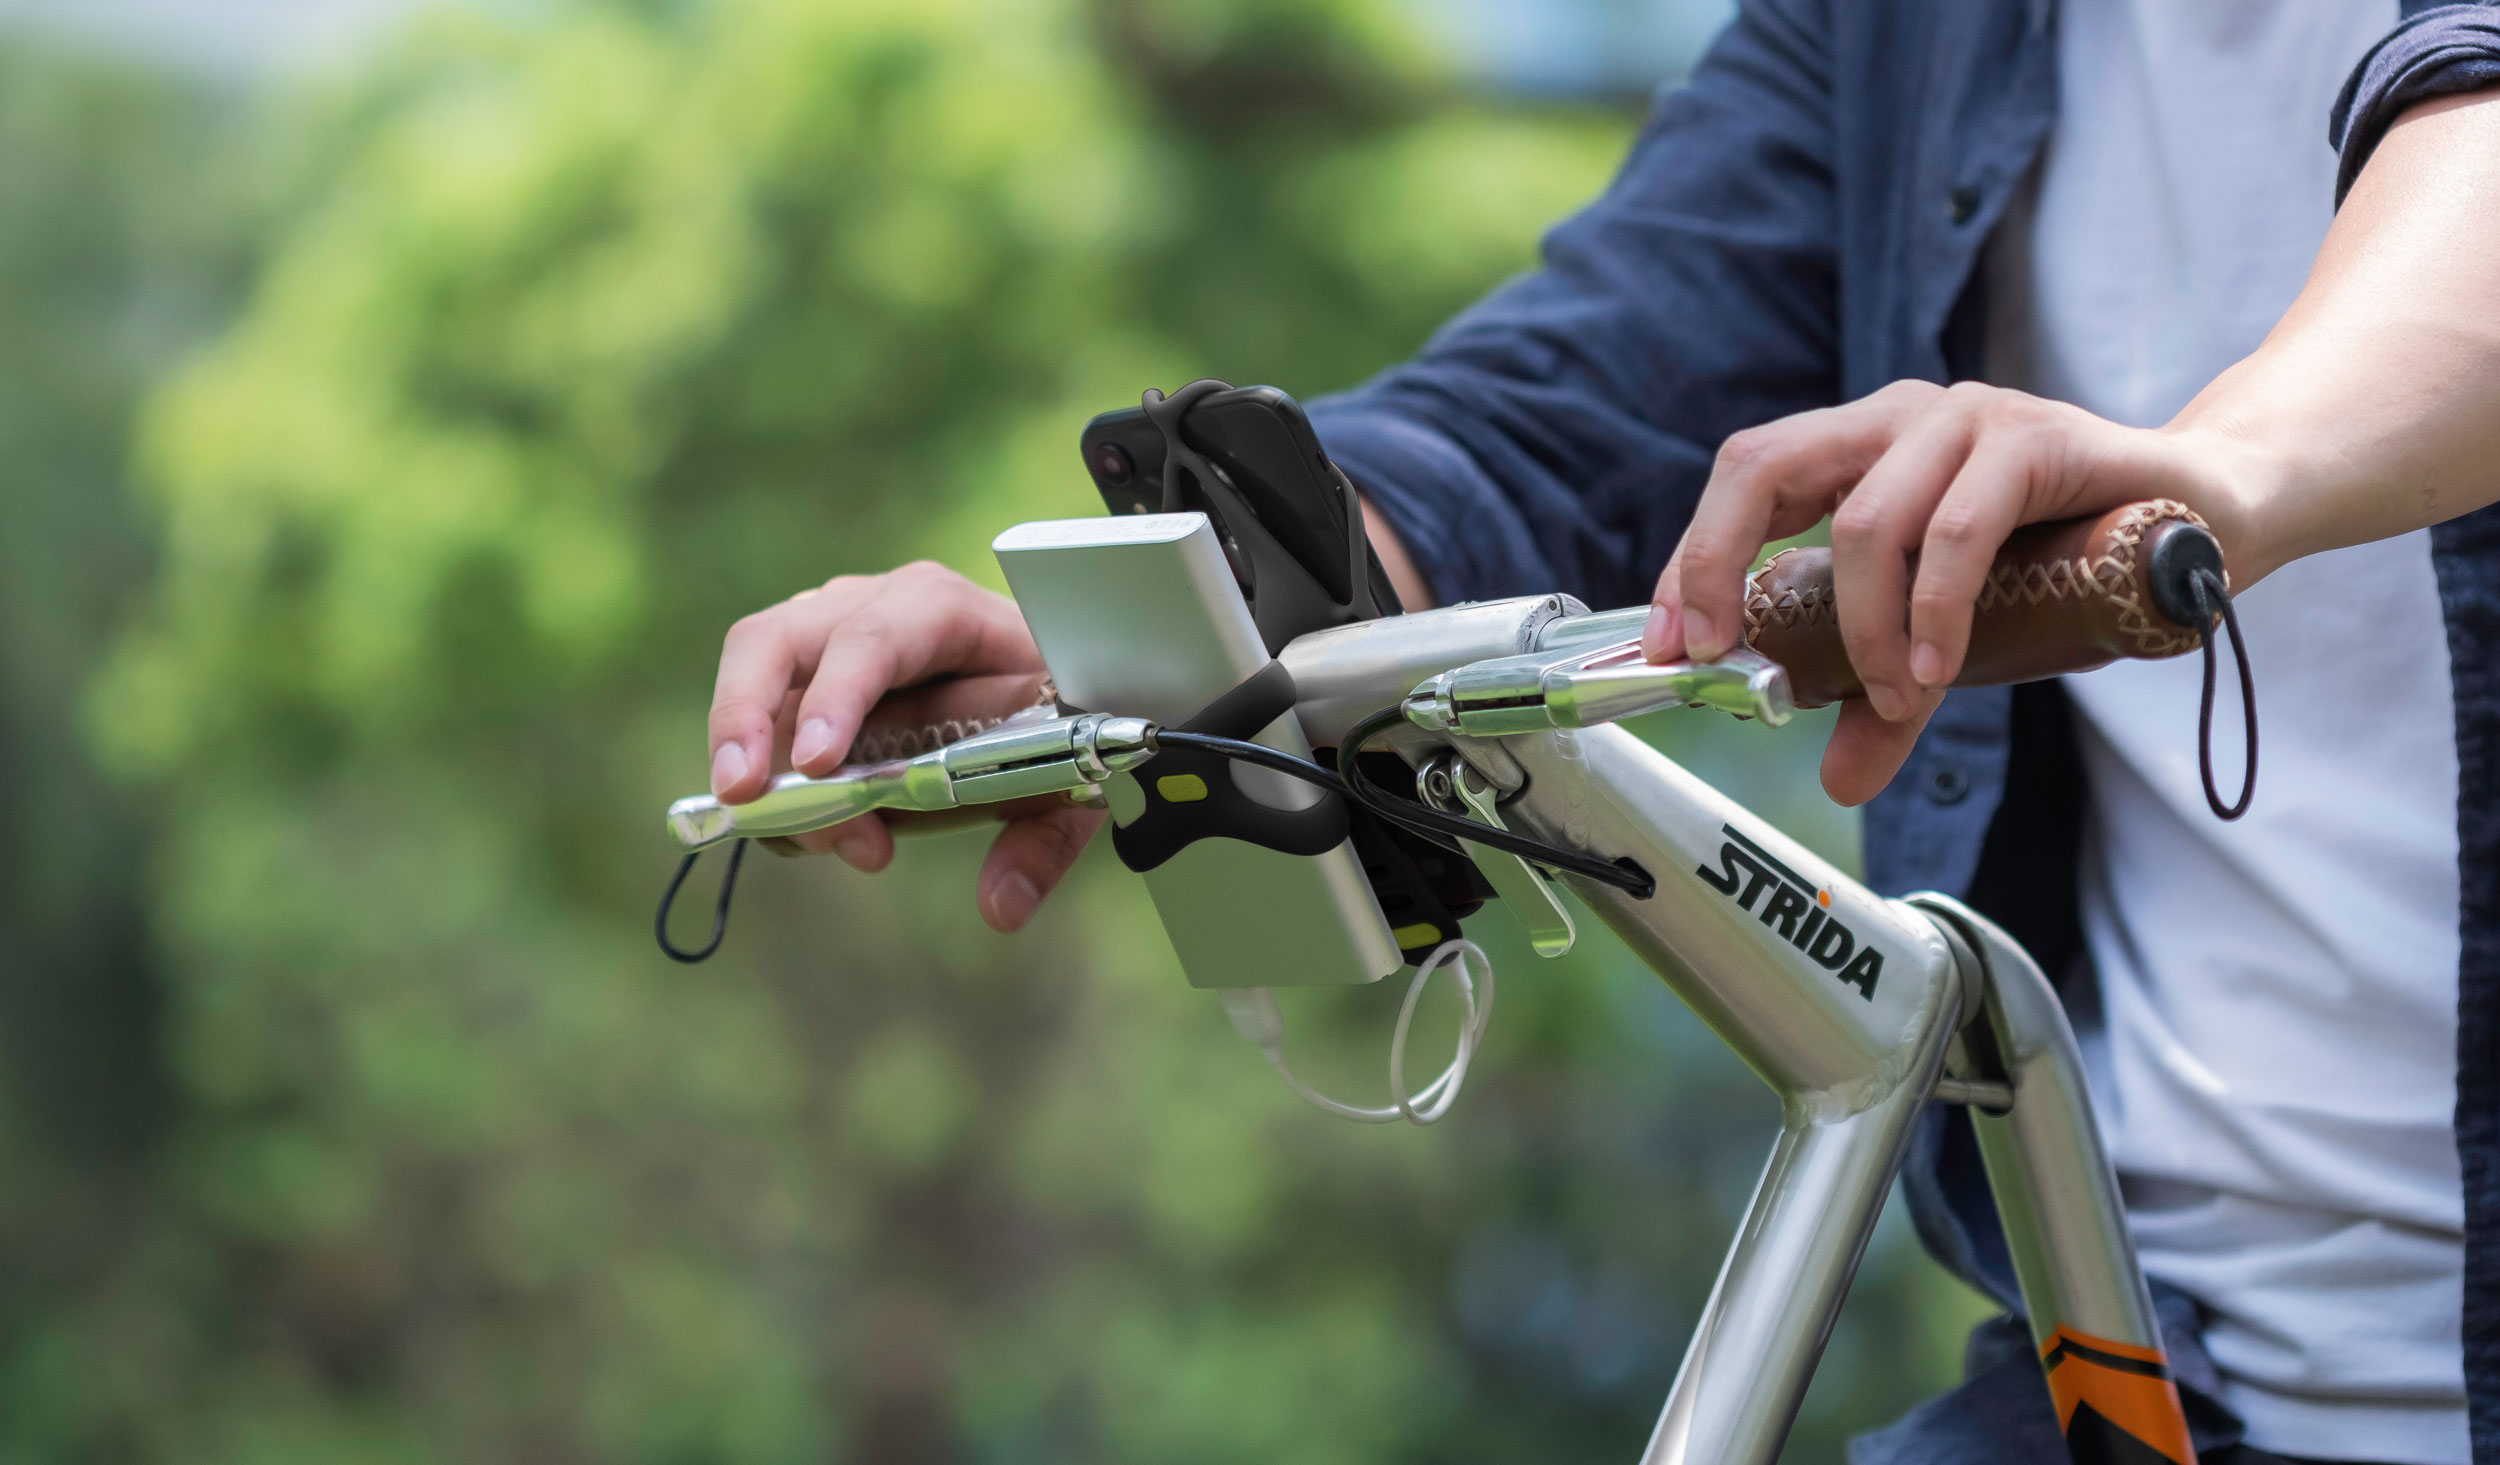 Bike Tie 4 + Power Strap - 自転車ハンドル用スマホホルダー - スポーツ - 製品情報 - Bone